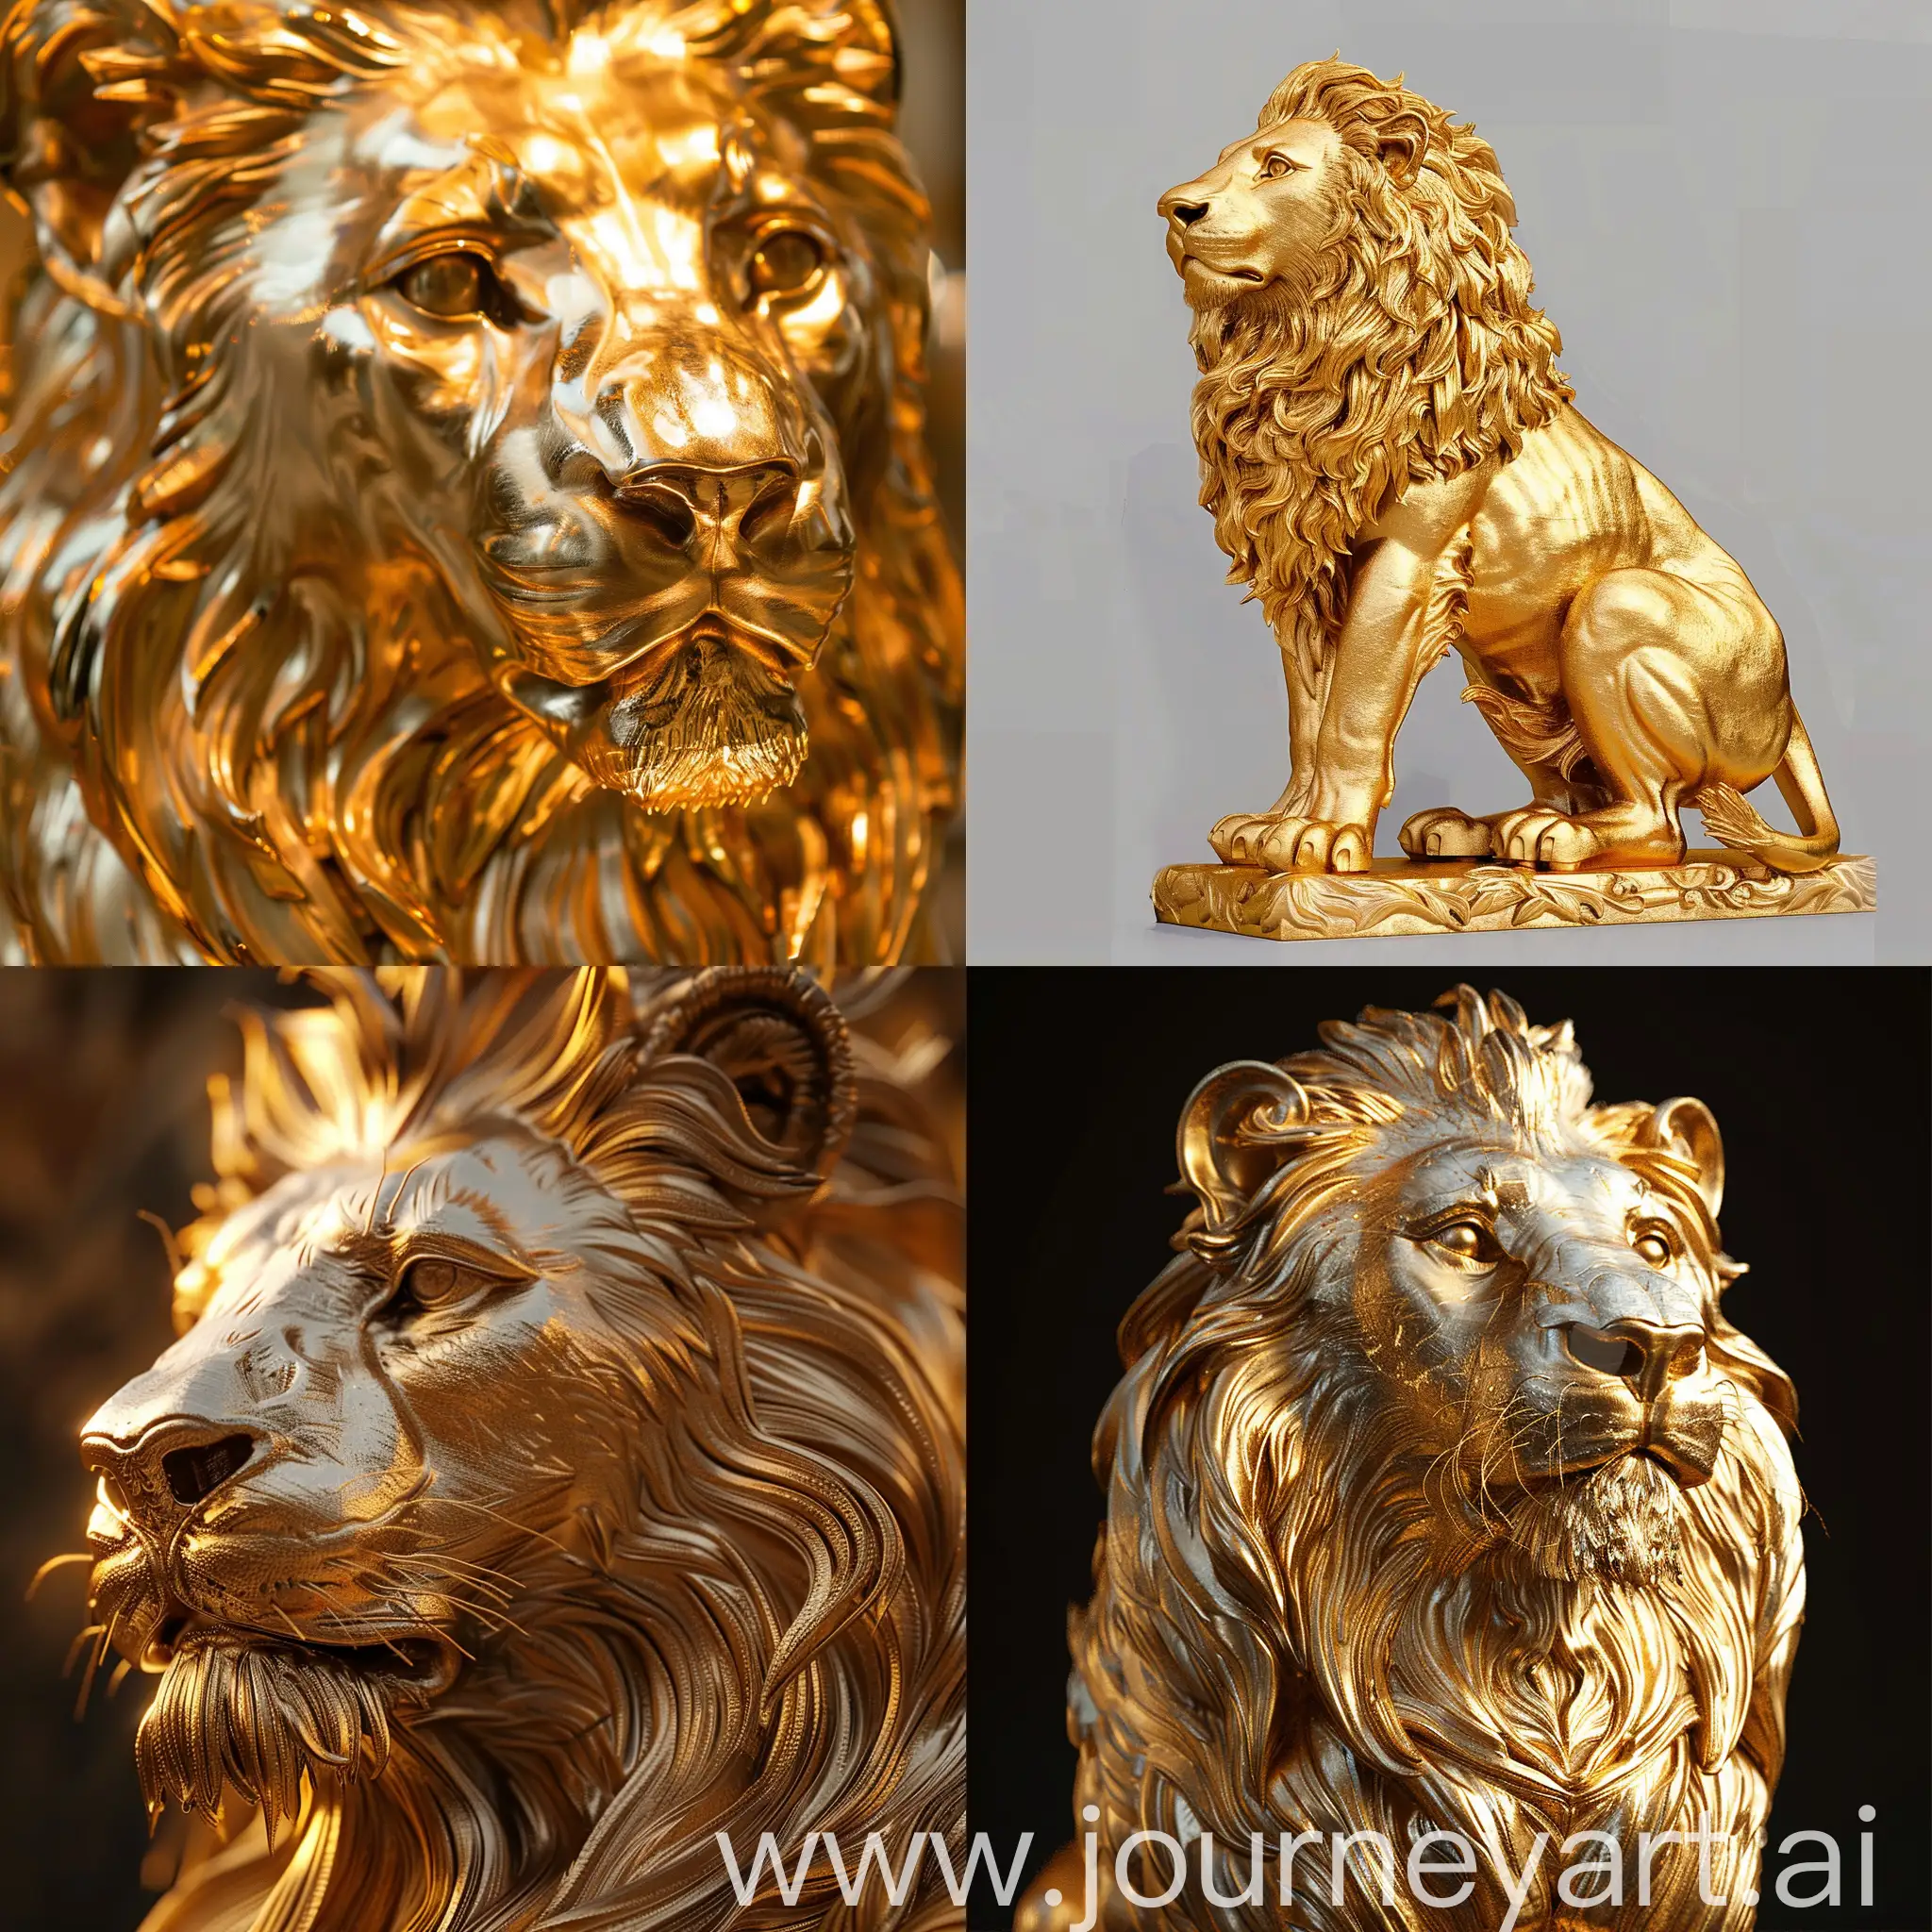 Majestic-Golden-Lion-Statue-Intricate-Sculpture-of-Regal-Magnificence